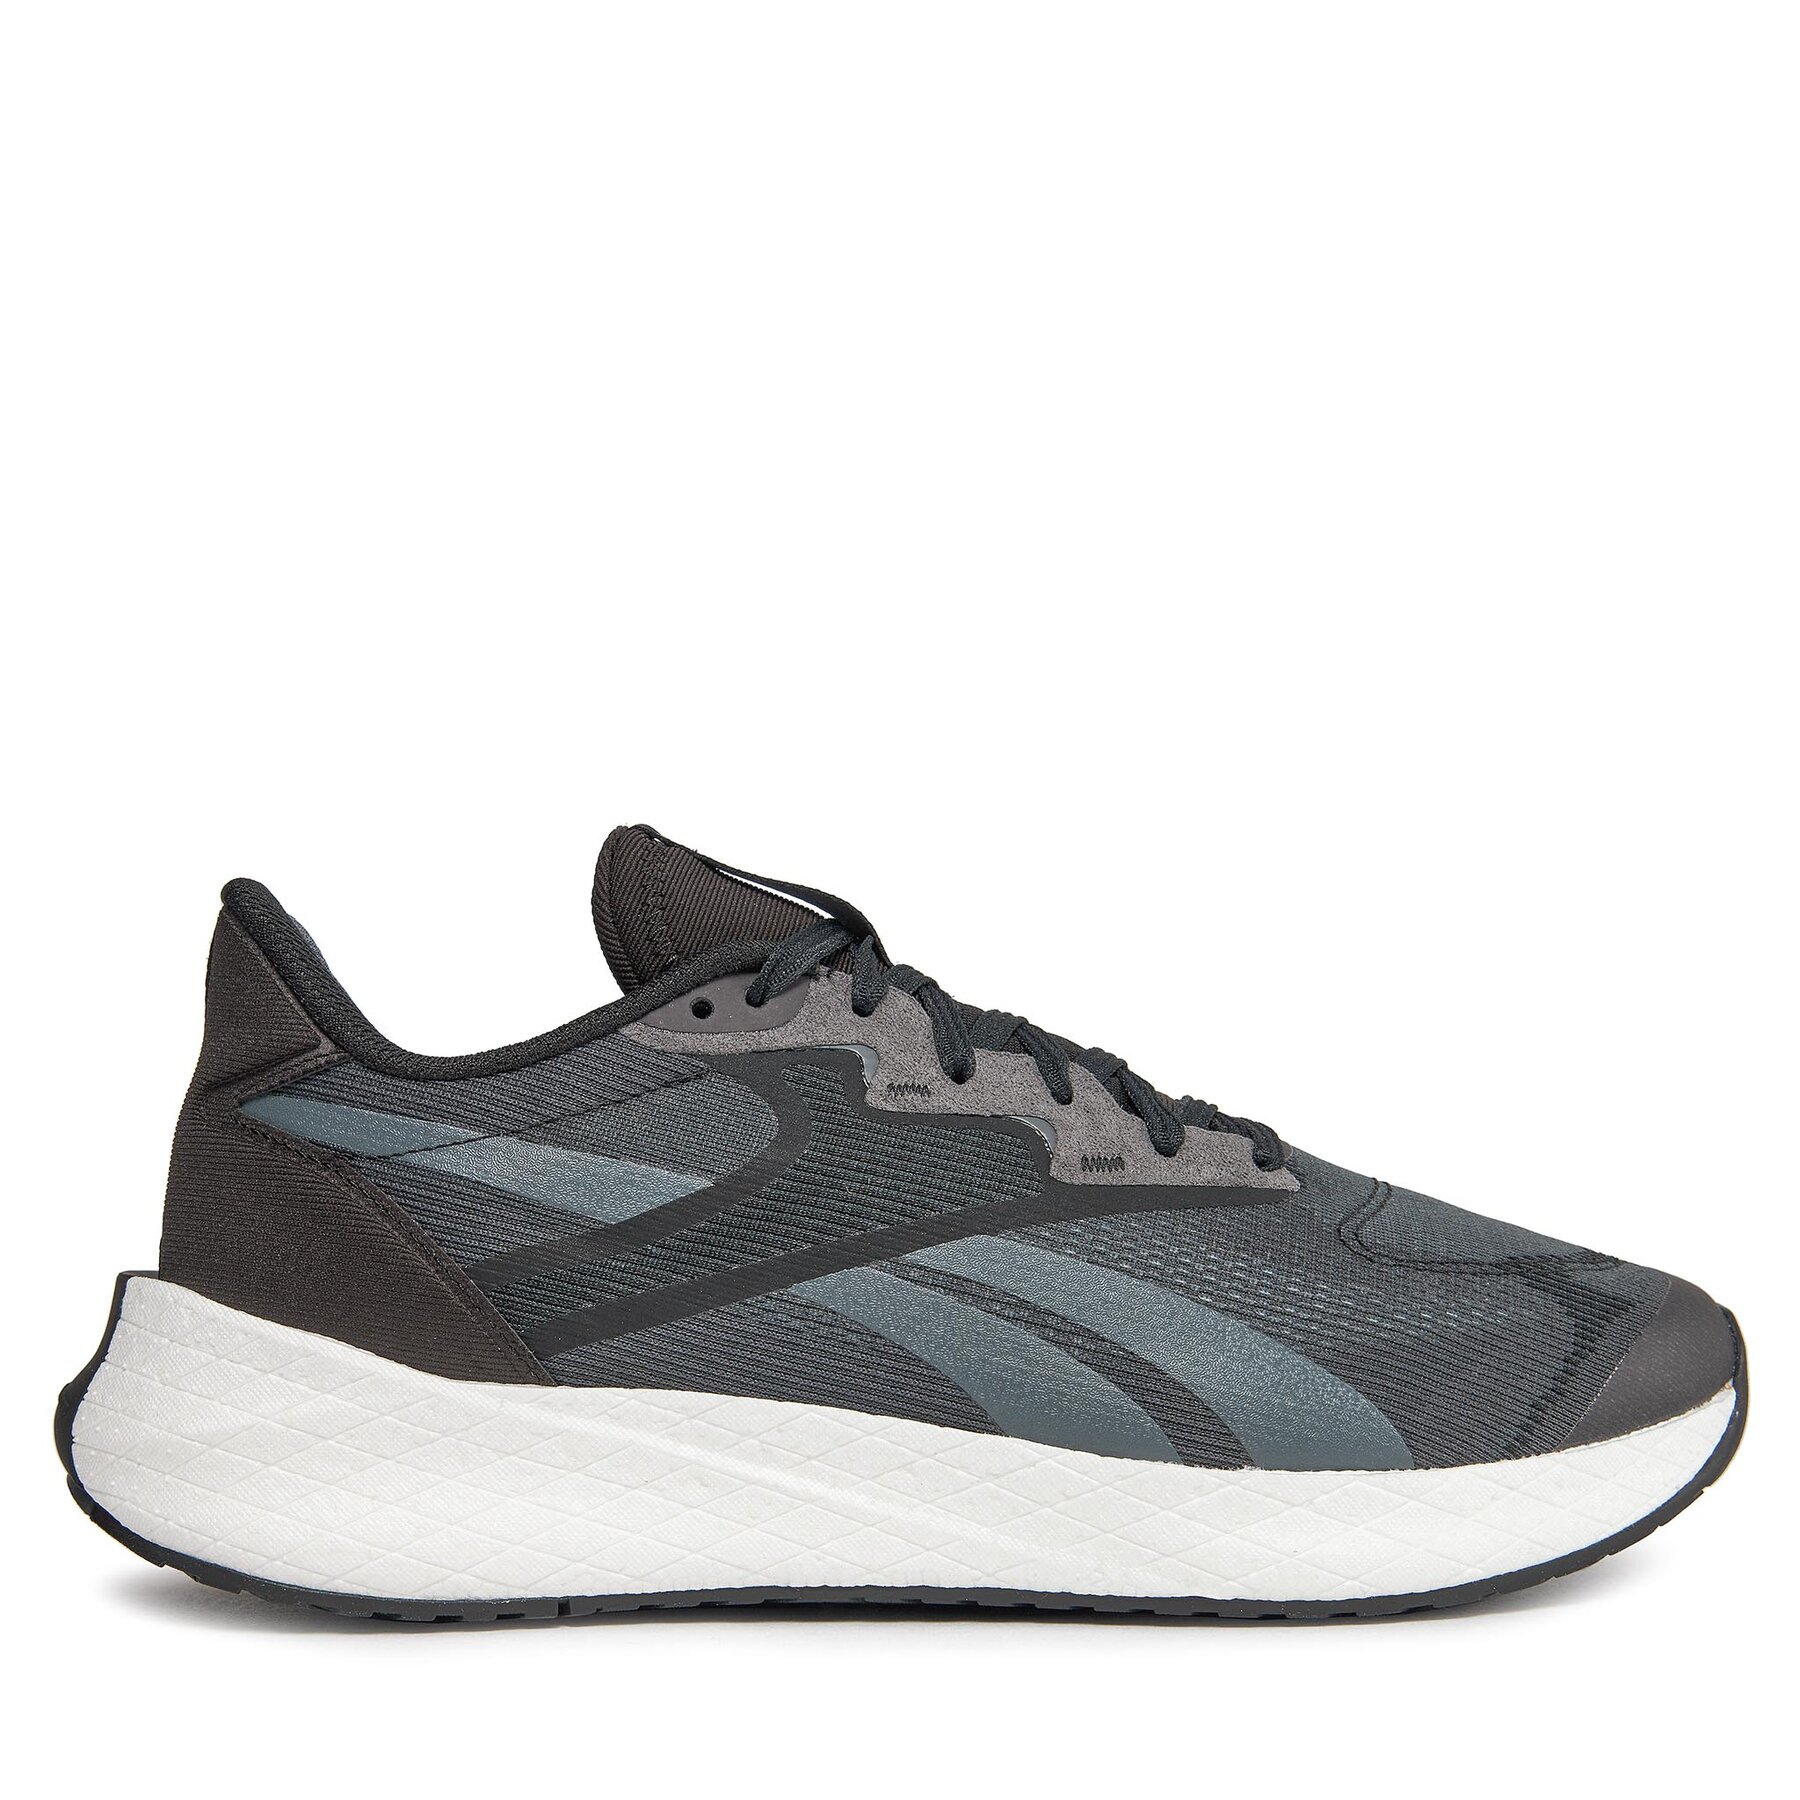 Schuhe Reebok Floatride Energy Symmetros 2.5 IE4636 Core Black/Pure Grey 7/Cloud White von Reebok